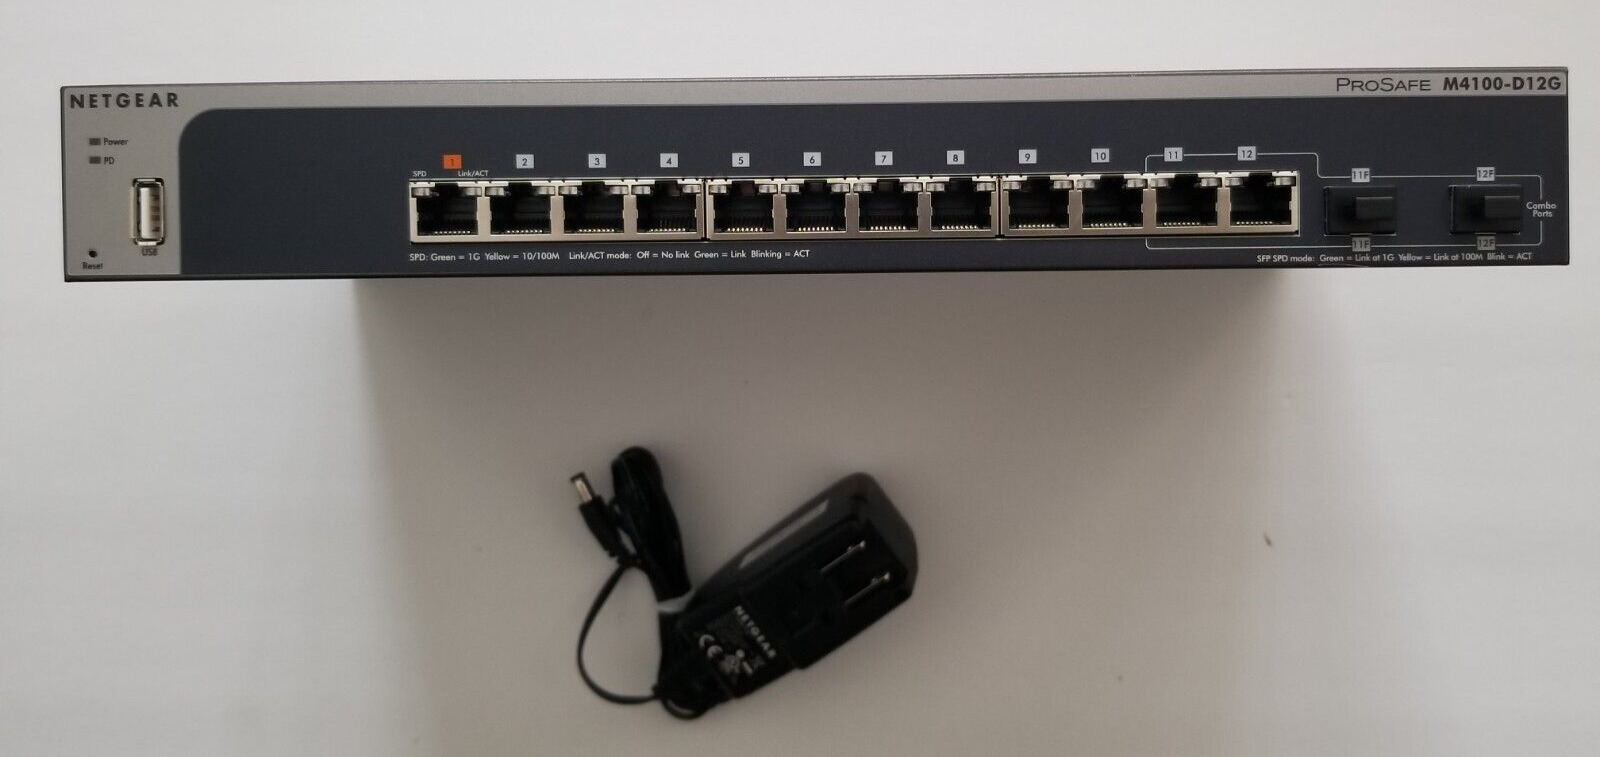 NETGEAR PROSAFE M4100-D12G 12-Port L2+ Desktop Managed Switch 🔥 (POWER-TESTED)